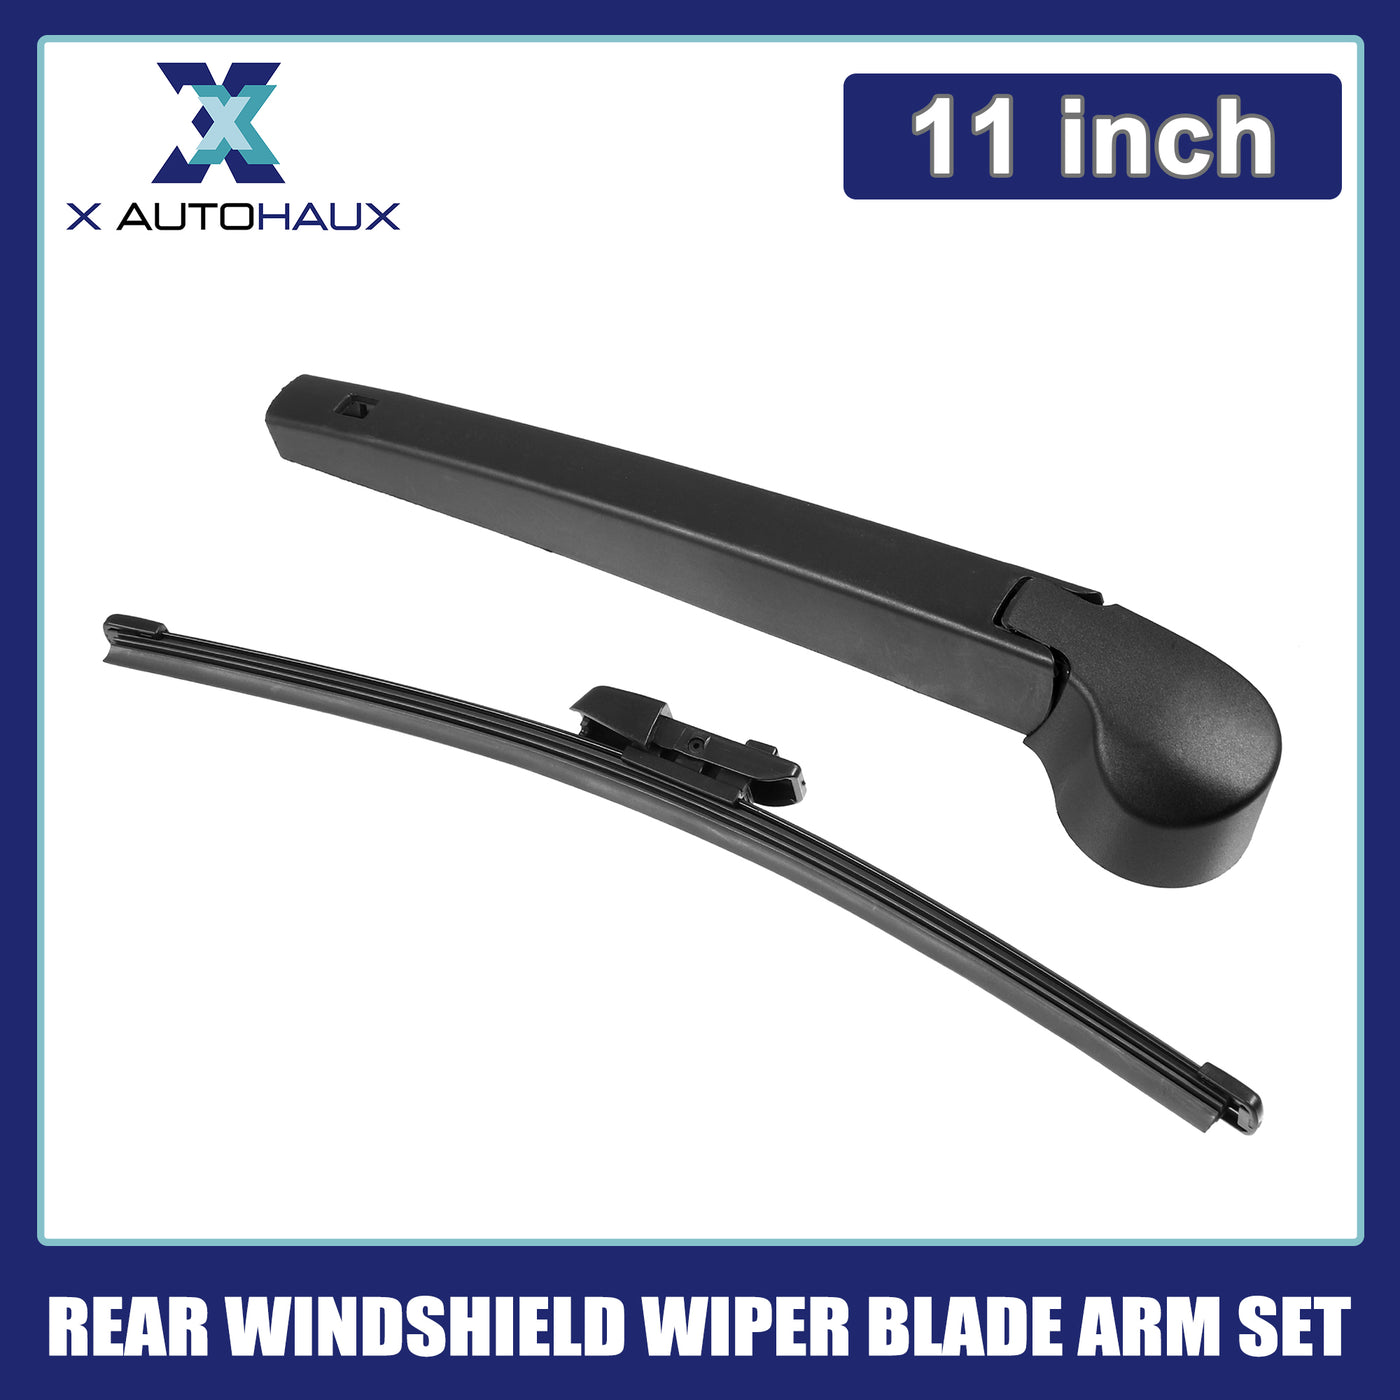 X AUTOHAUX 11inch Rear Windshield Wiper Blade Arm Set for VW Polo Mk5 Hatchback 2009-2018